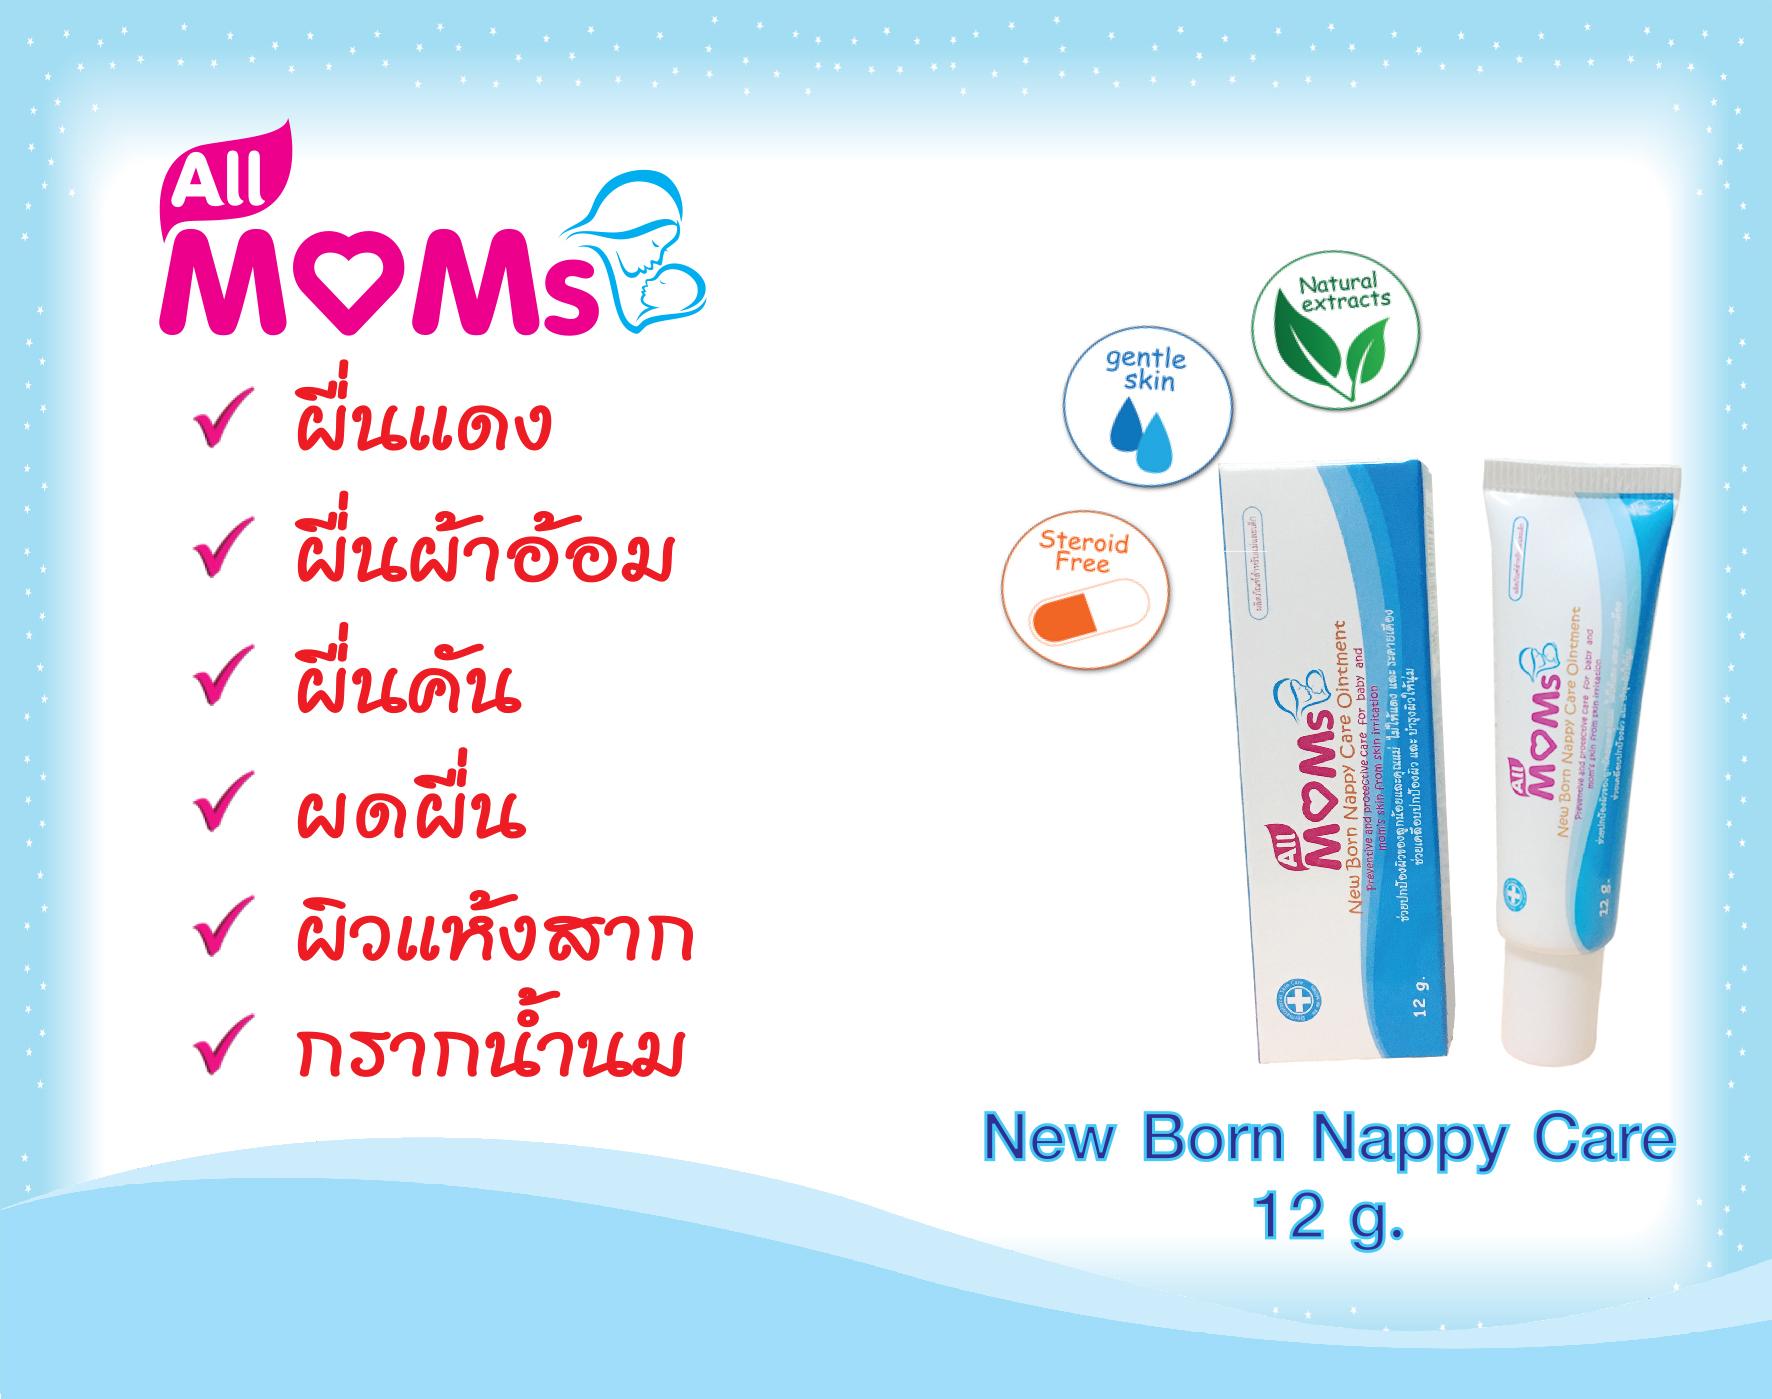 All MOMs : New Born Nappy Care Ointment 12g. (ครีมทาแก้ผื่นผ้าอ้อม ผื่นแดง ผื่นคัน ผดผื่น กรากน้ำนม)